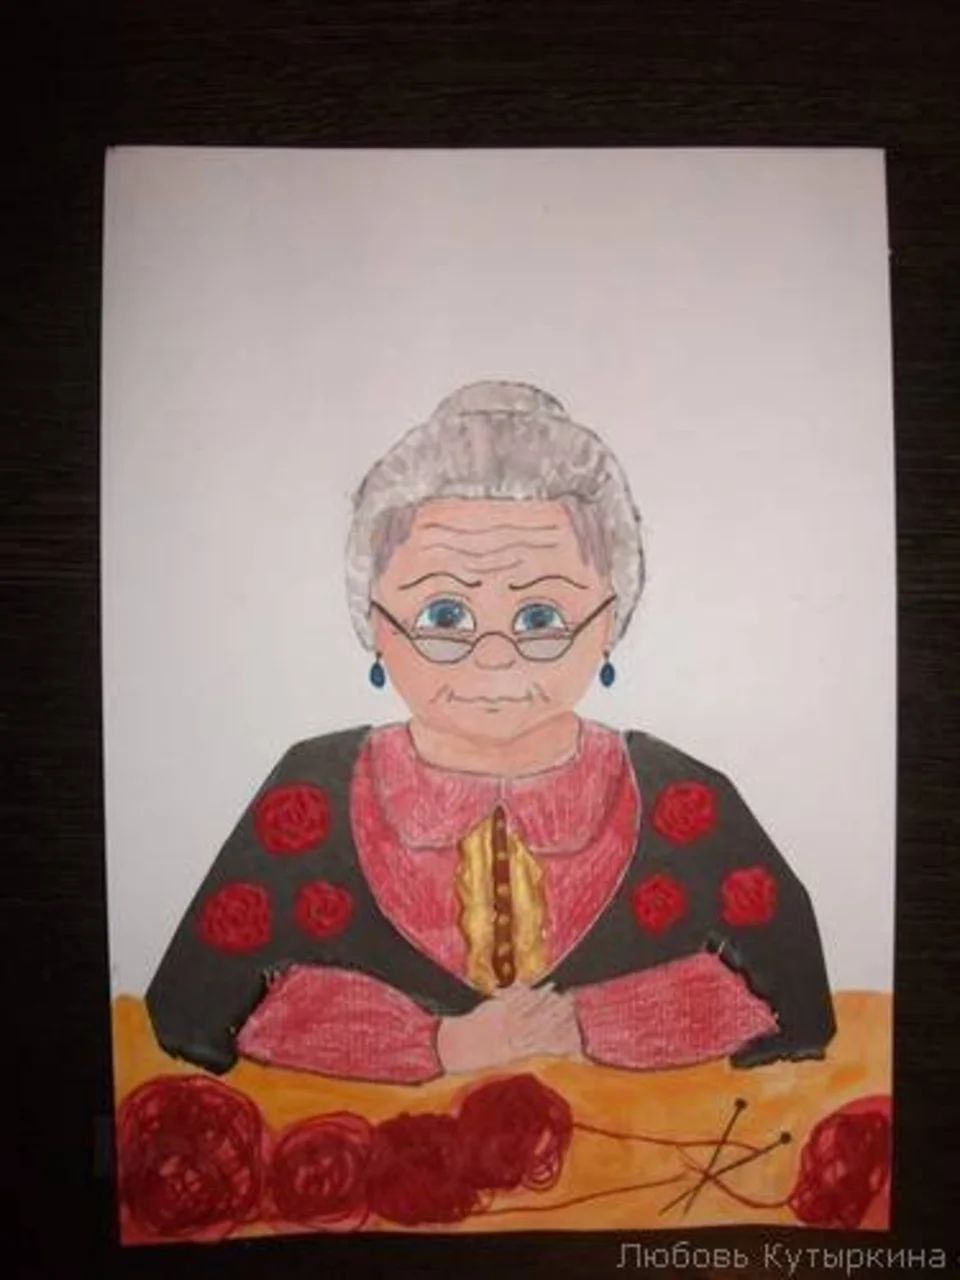 Бабушка 4 легкого. Портрет бабушки. Бабушка рисунок. Рисование подарок для бабушки. Портрет любимой бабушки.